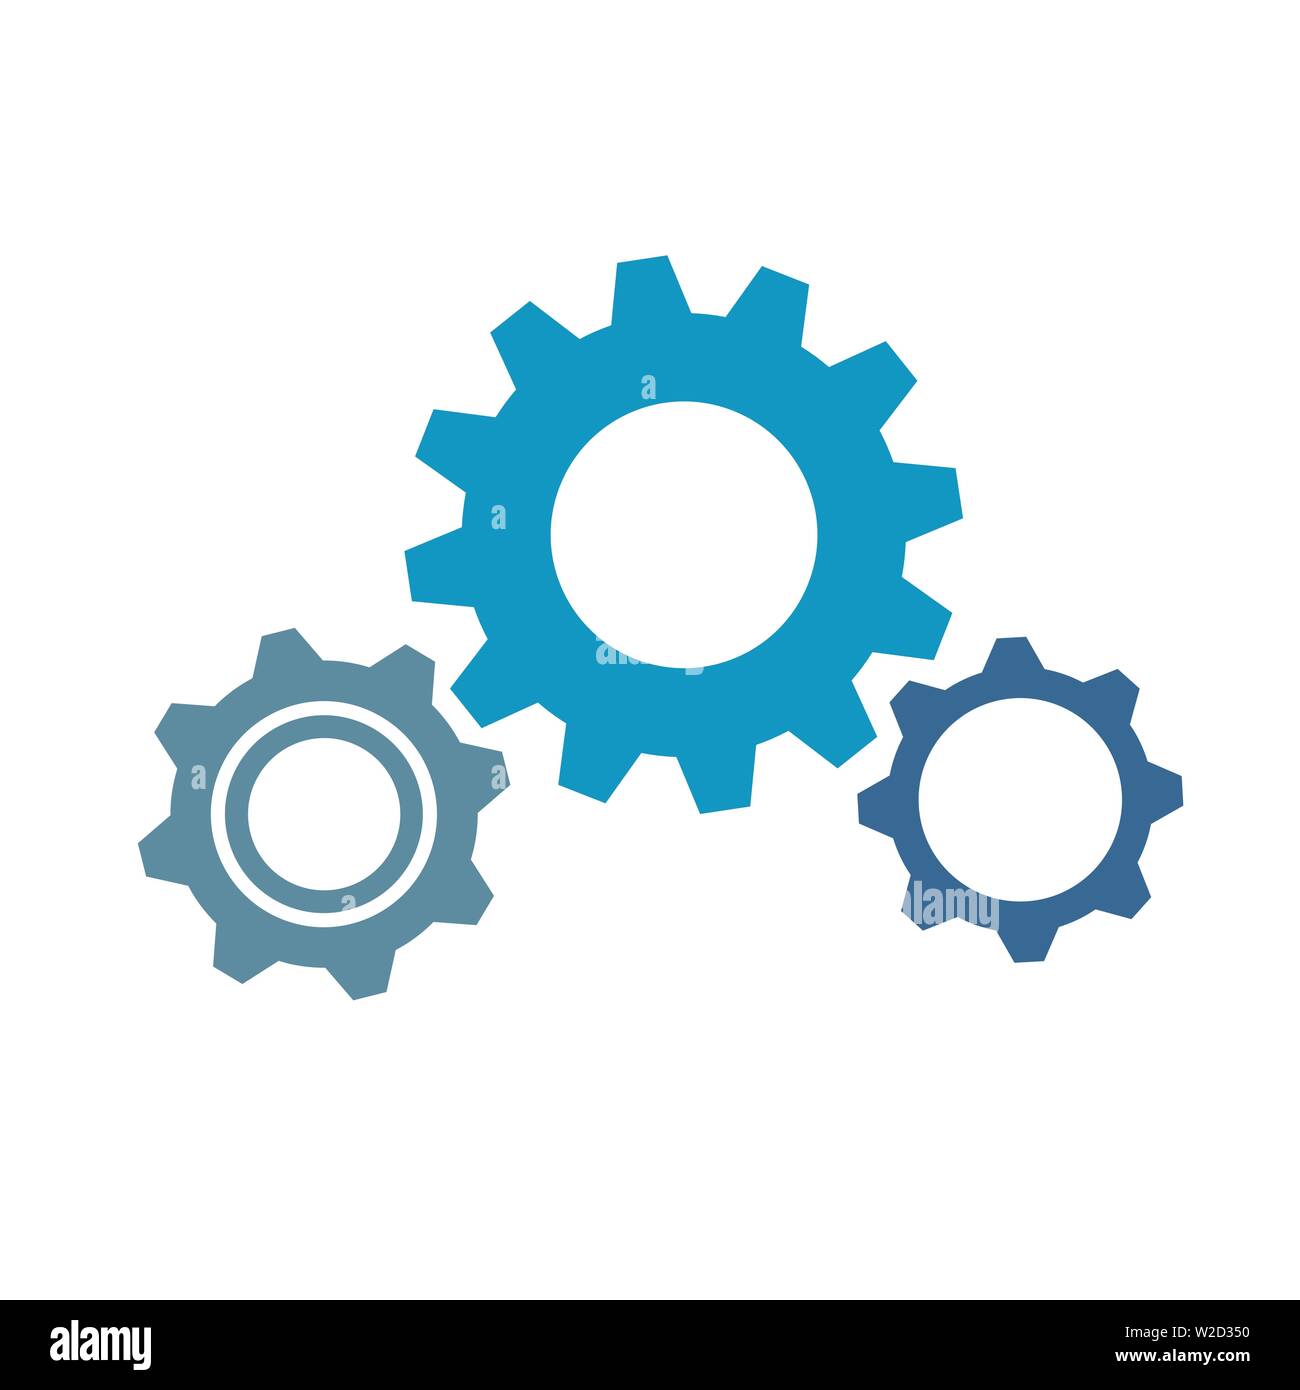 Drei blaue Gänge business Symbol Teamarbeit Vektor-illustration EPS 10. Stock Vektor